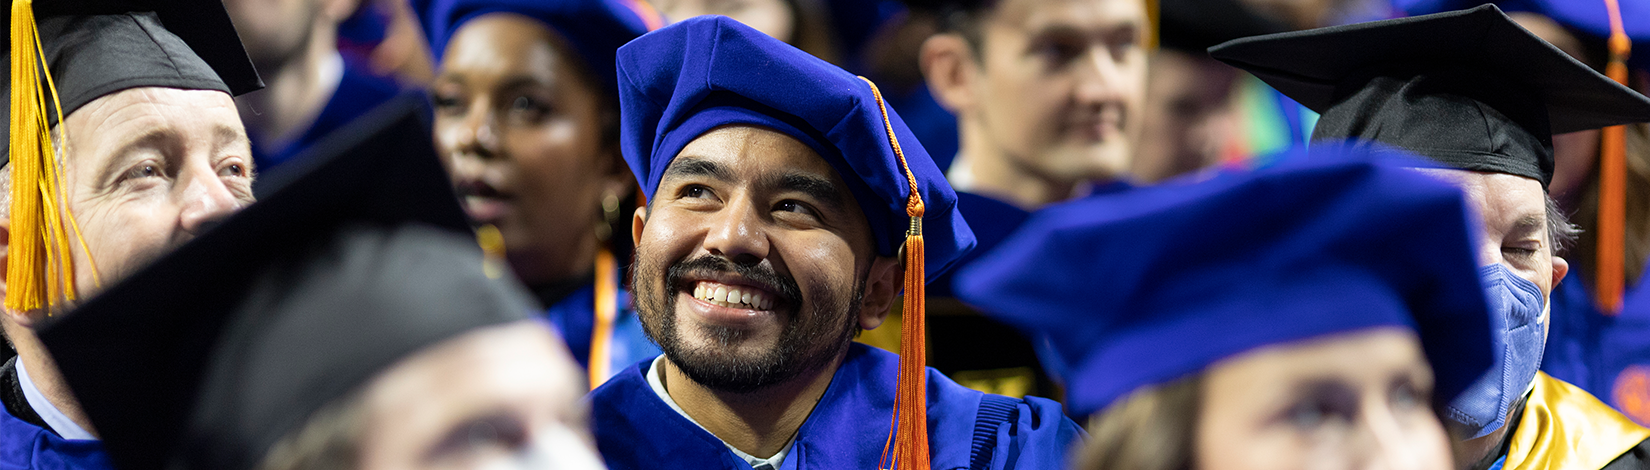 Graduating masters degree student in full graduation regalia glances upward during commencement.